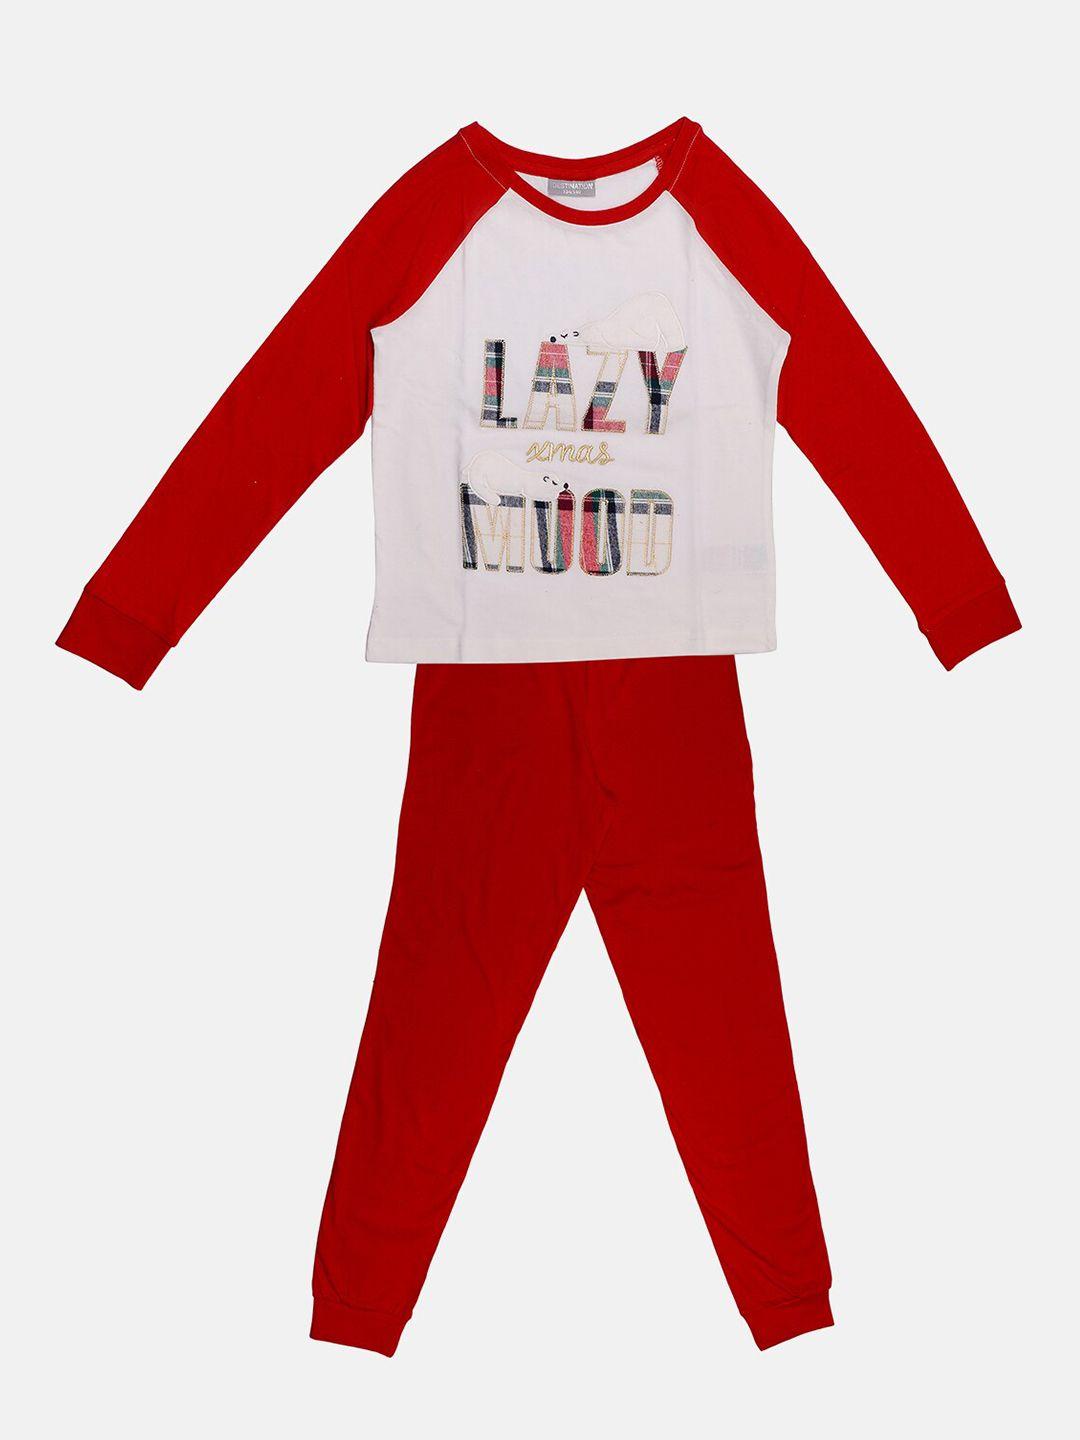 tiny hug boys red& white printed clothing set